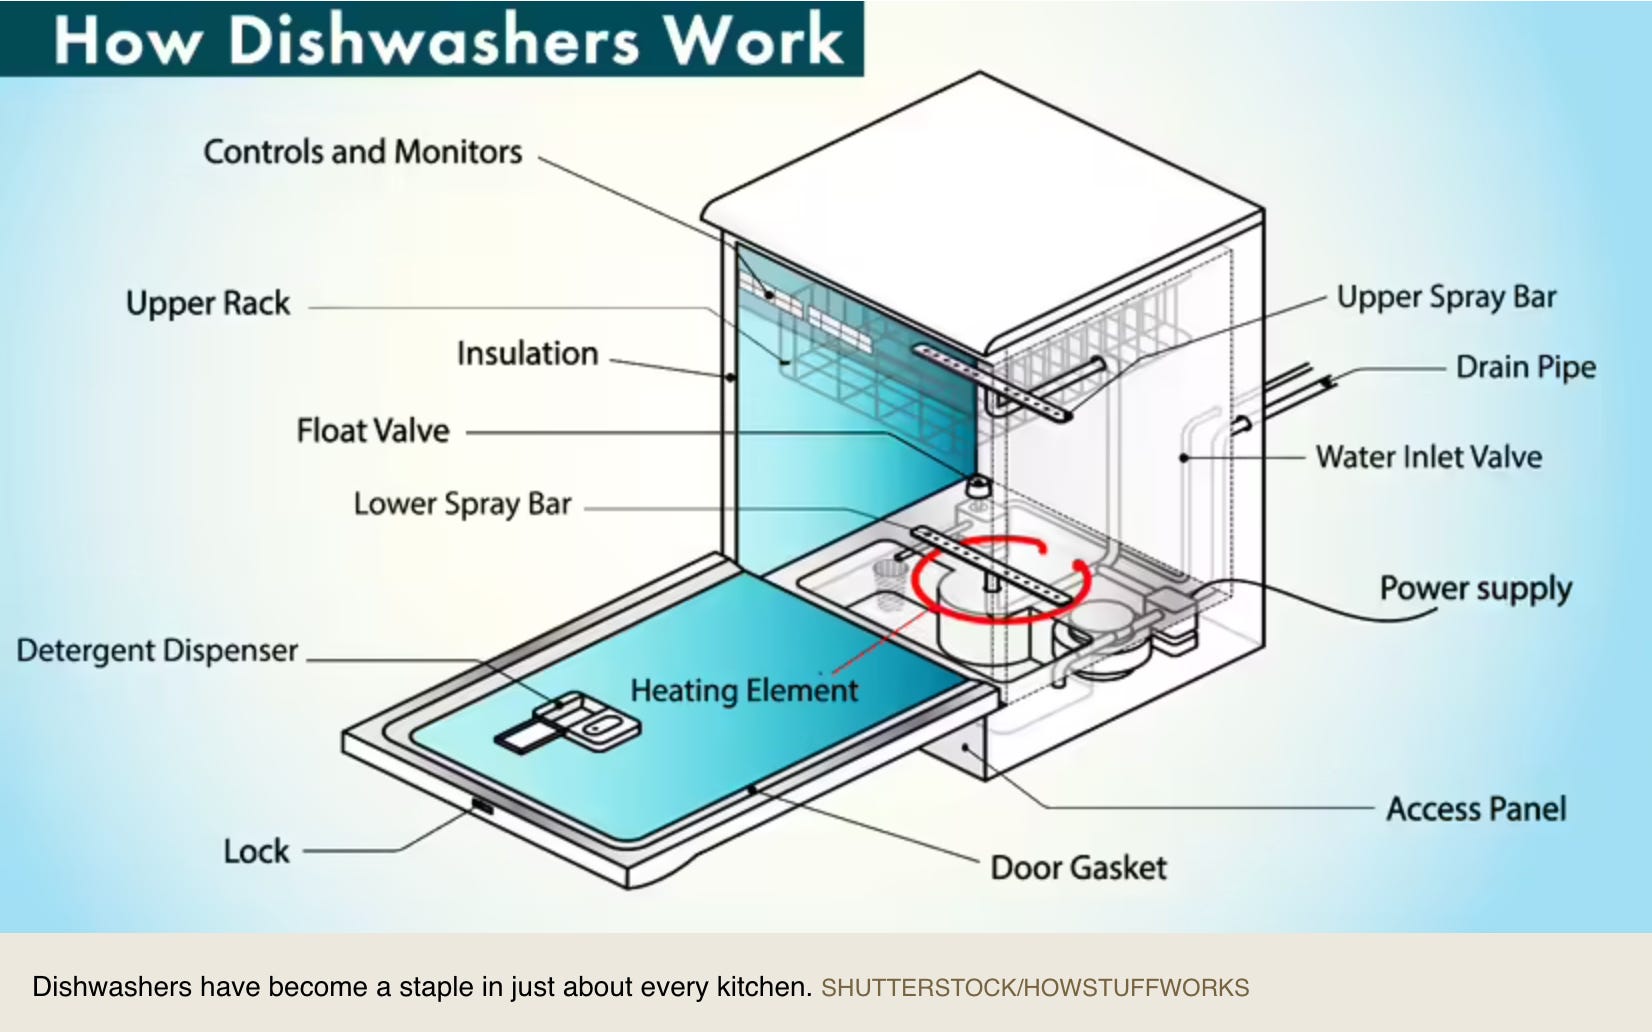 Why Do You Need Insulation Around a Dishwasher?